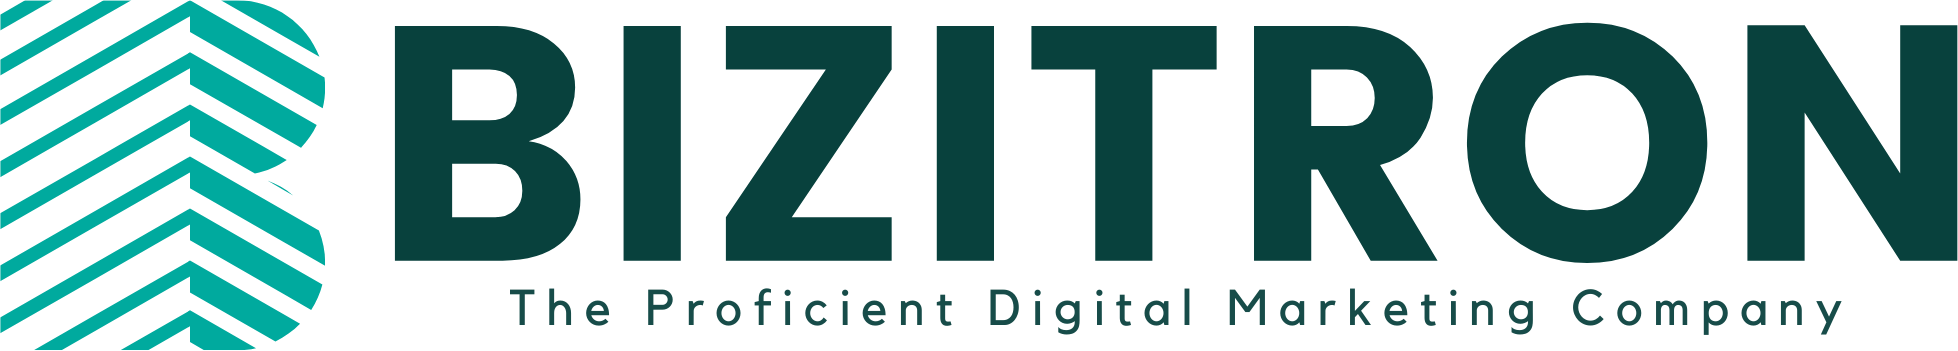 Bizitron: The Proficient Digital Marketing Company